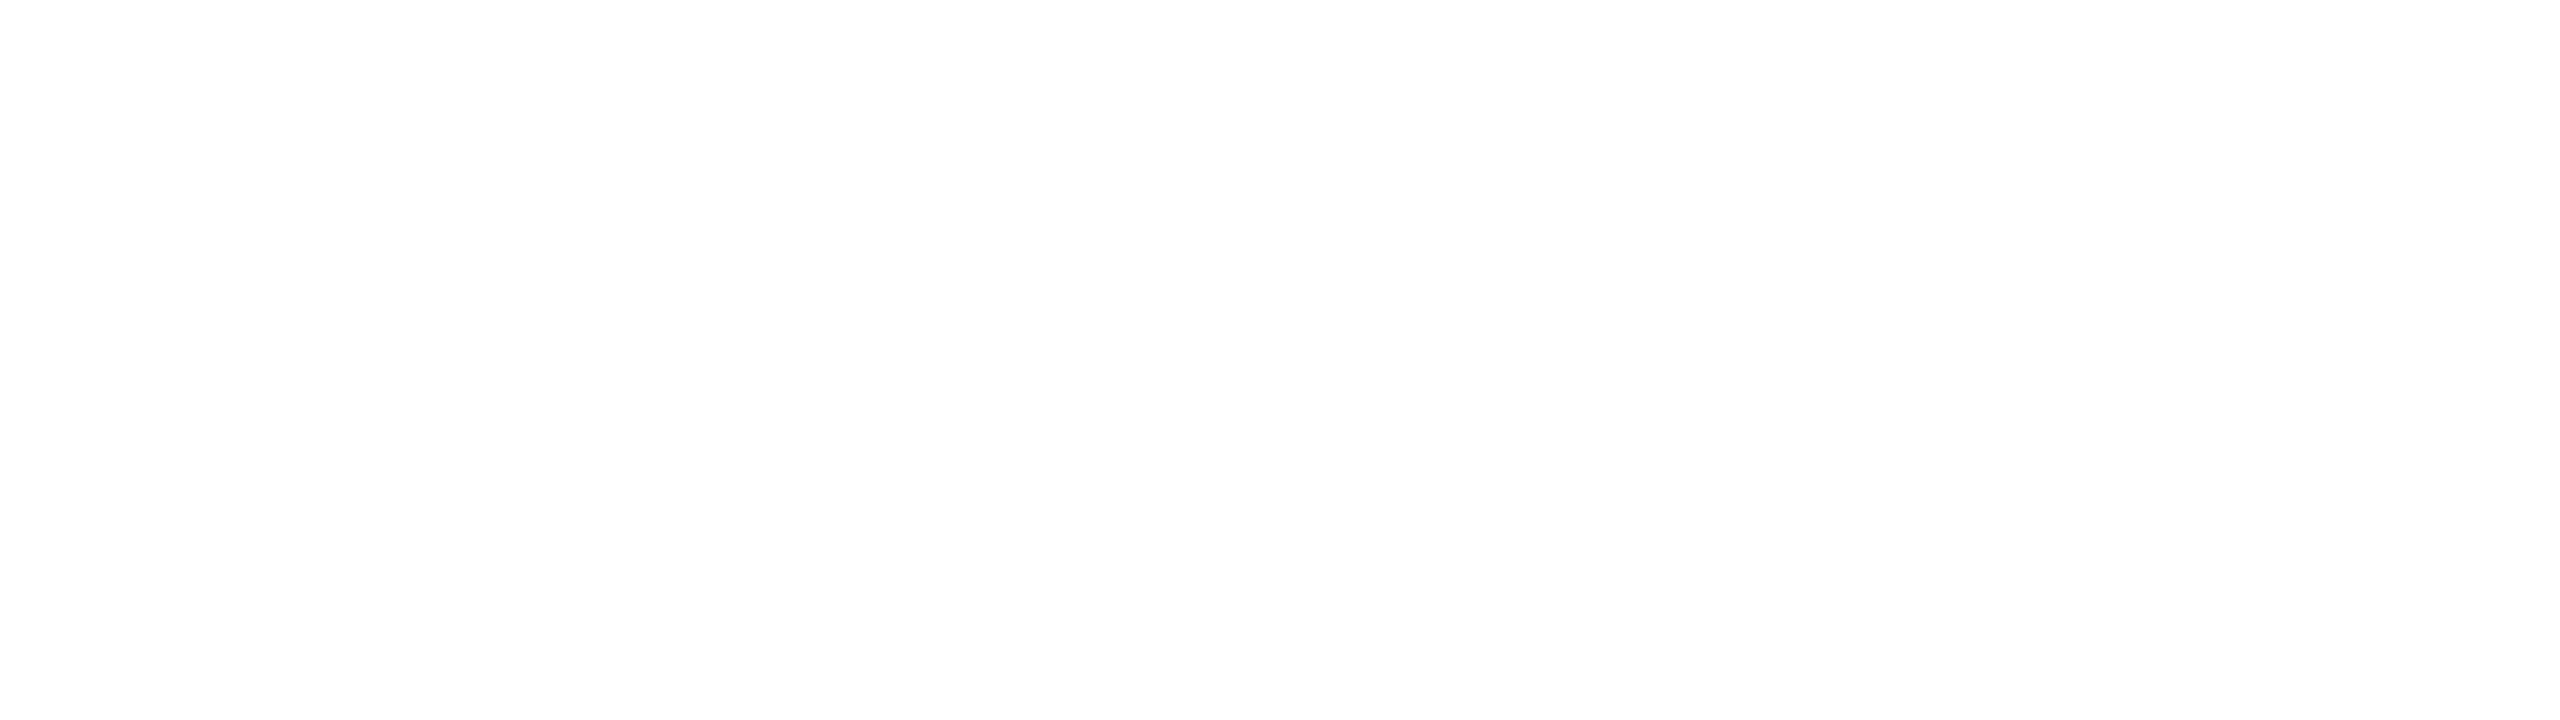 Positive Synergy White